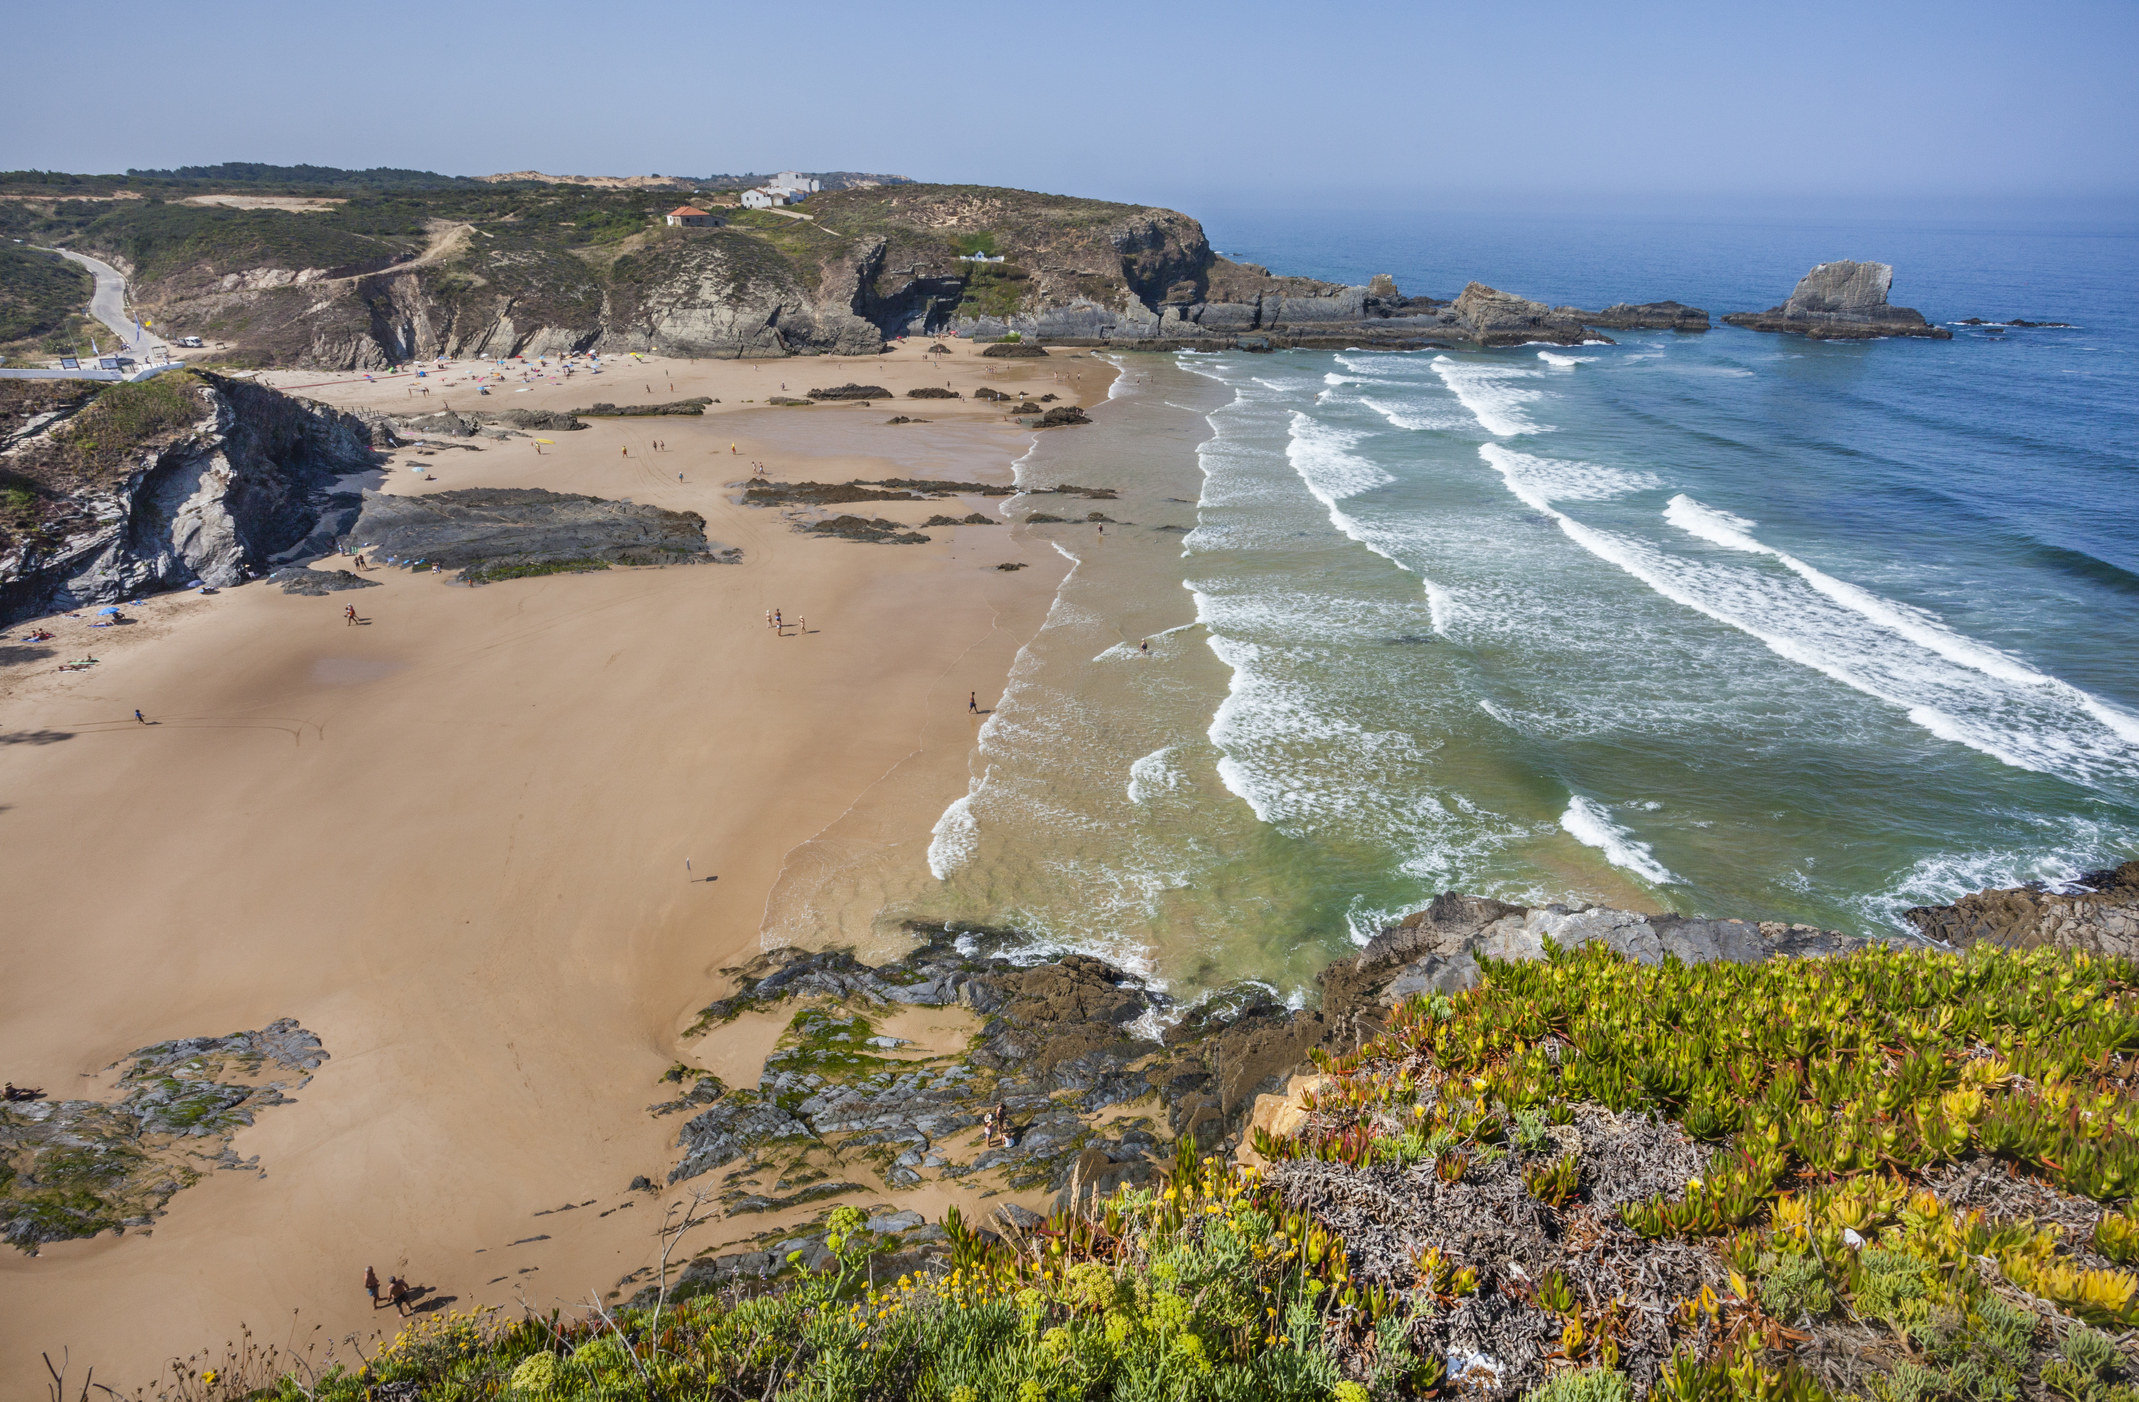 A quiet beach in the Alentejo region of Portugal